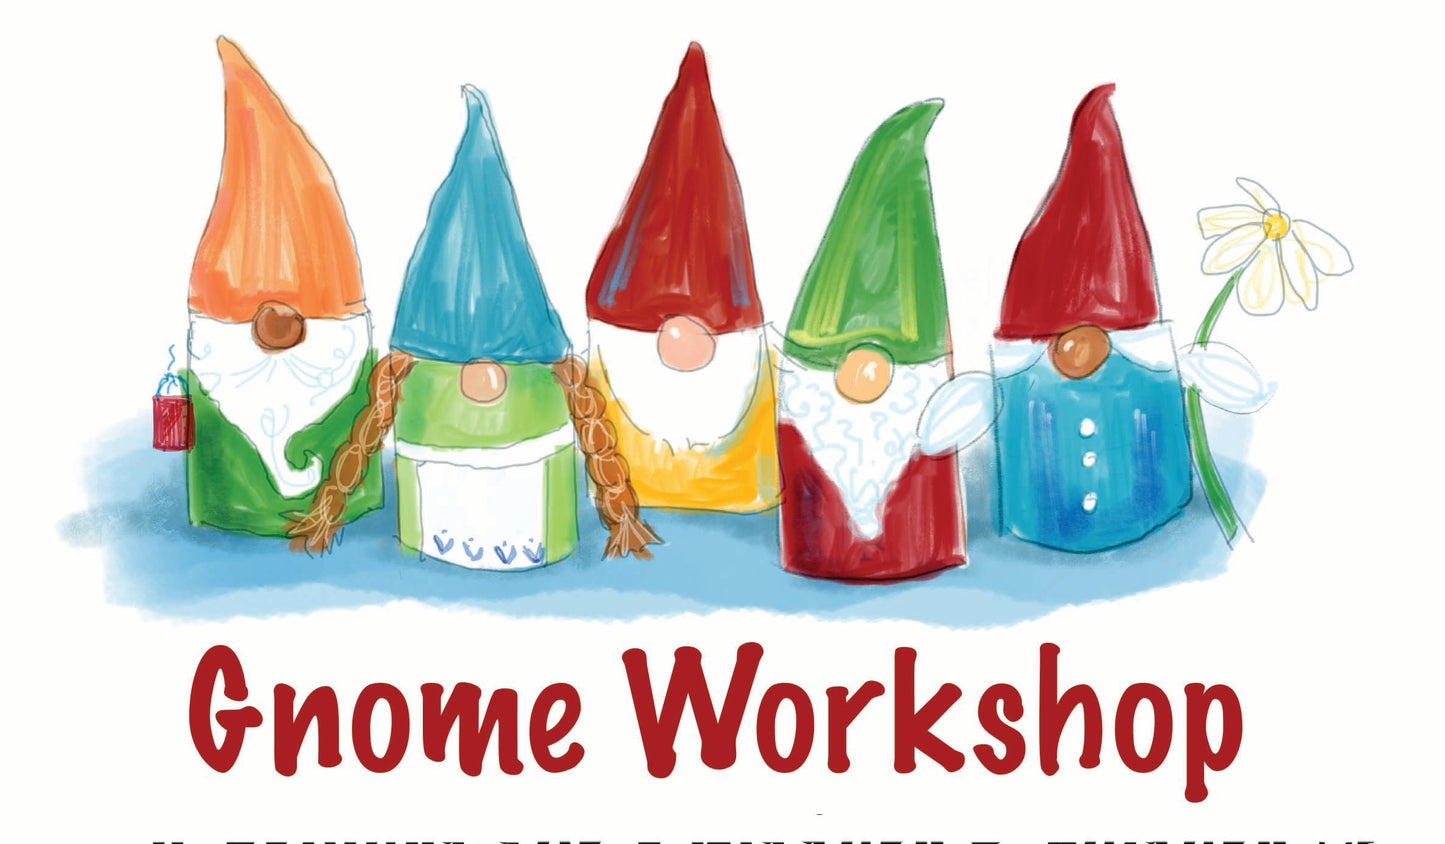 Gnome Workshop - December 10th 1-3pm